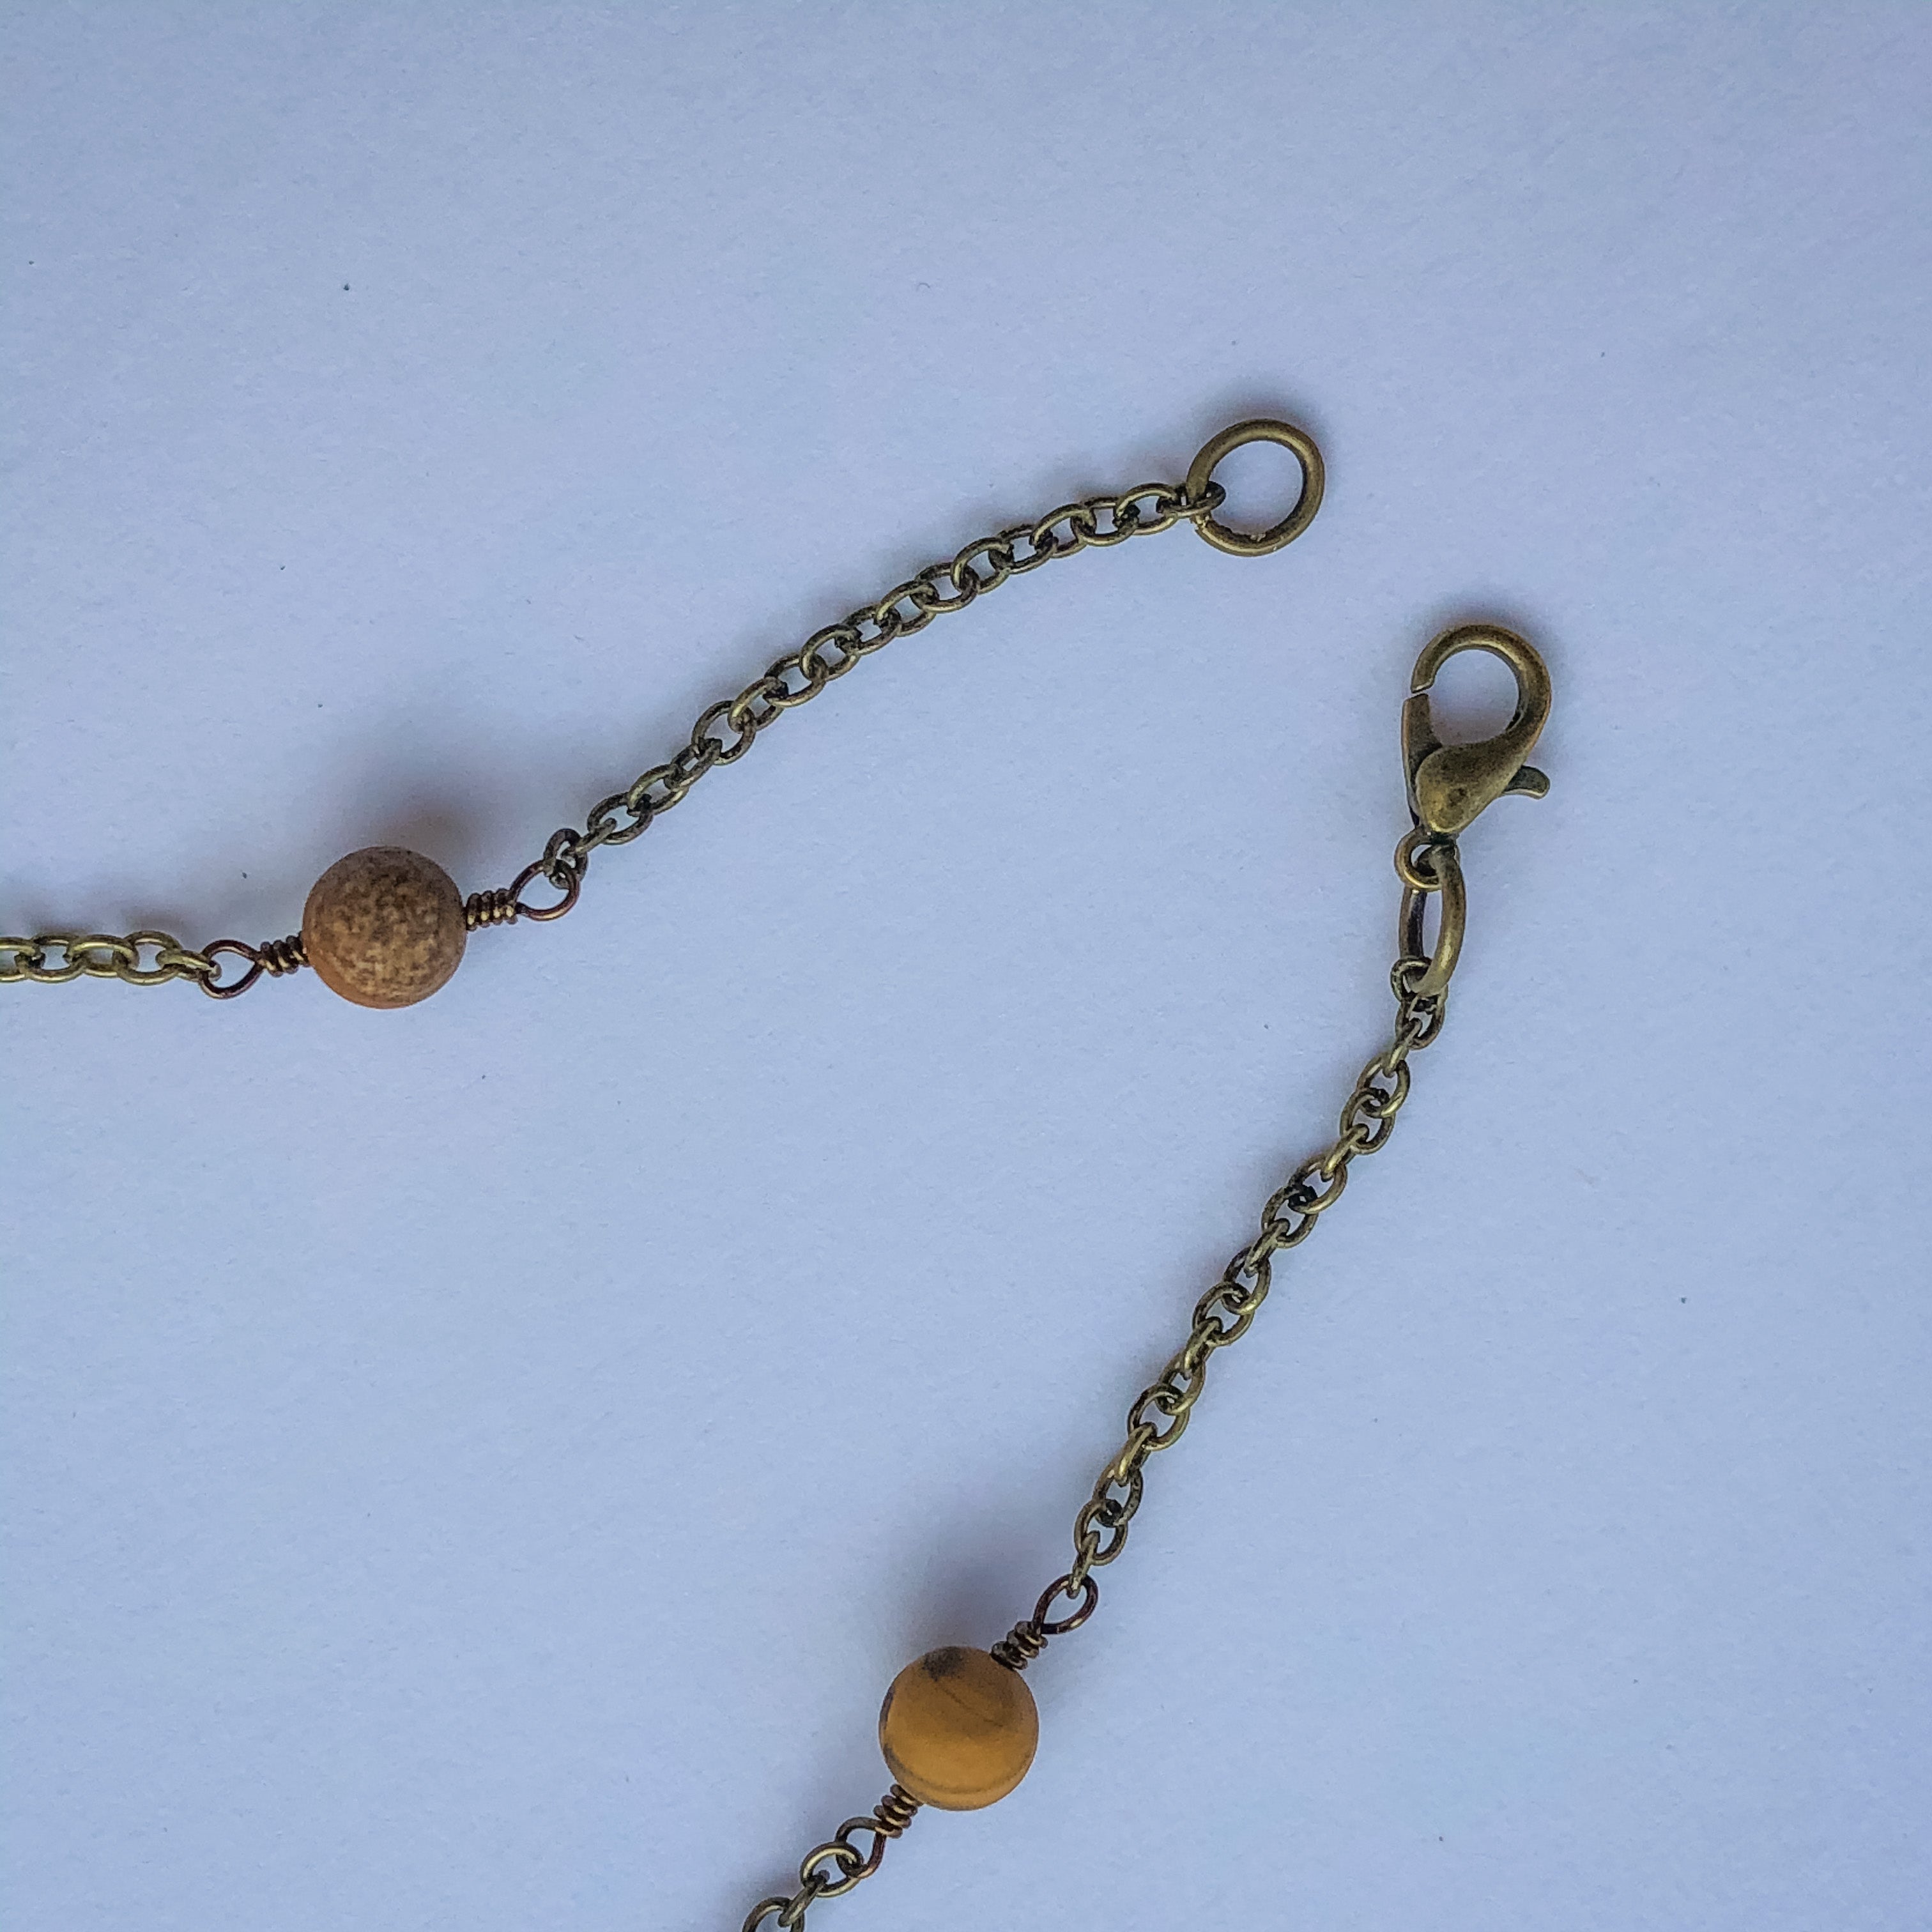 jasper chain necklace